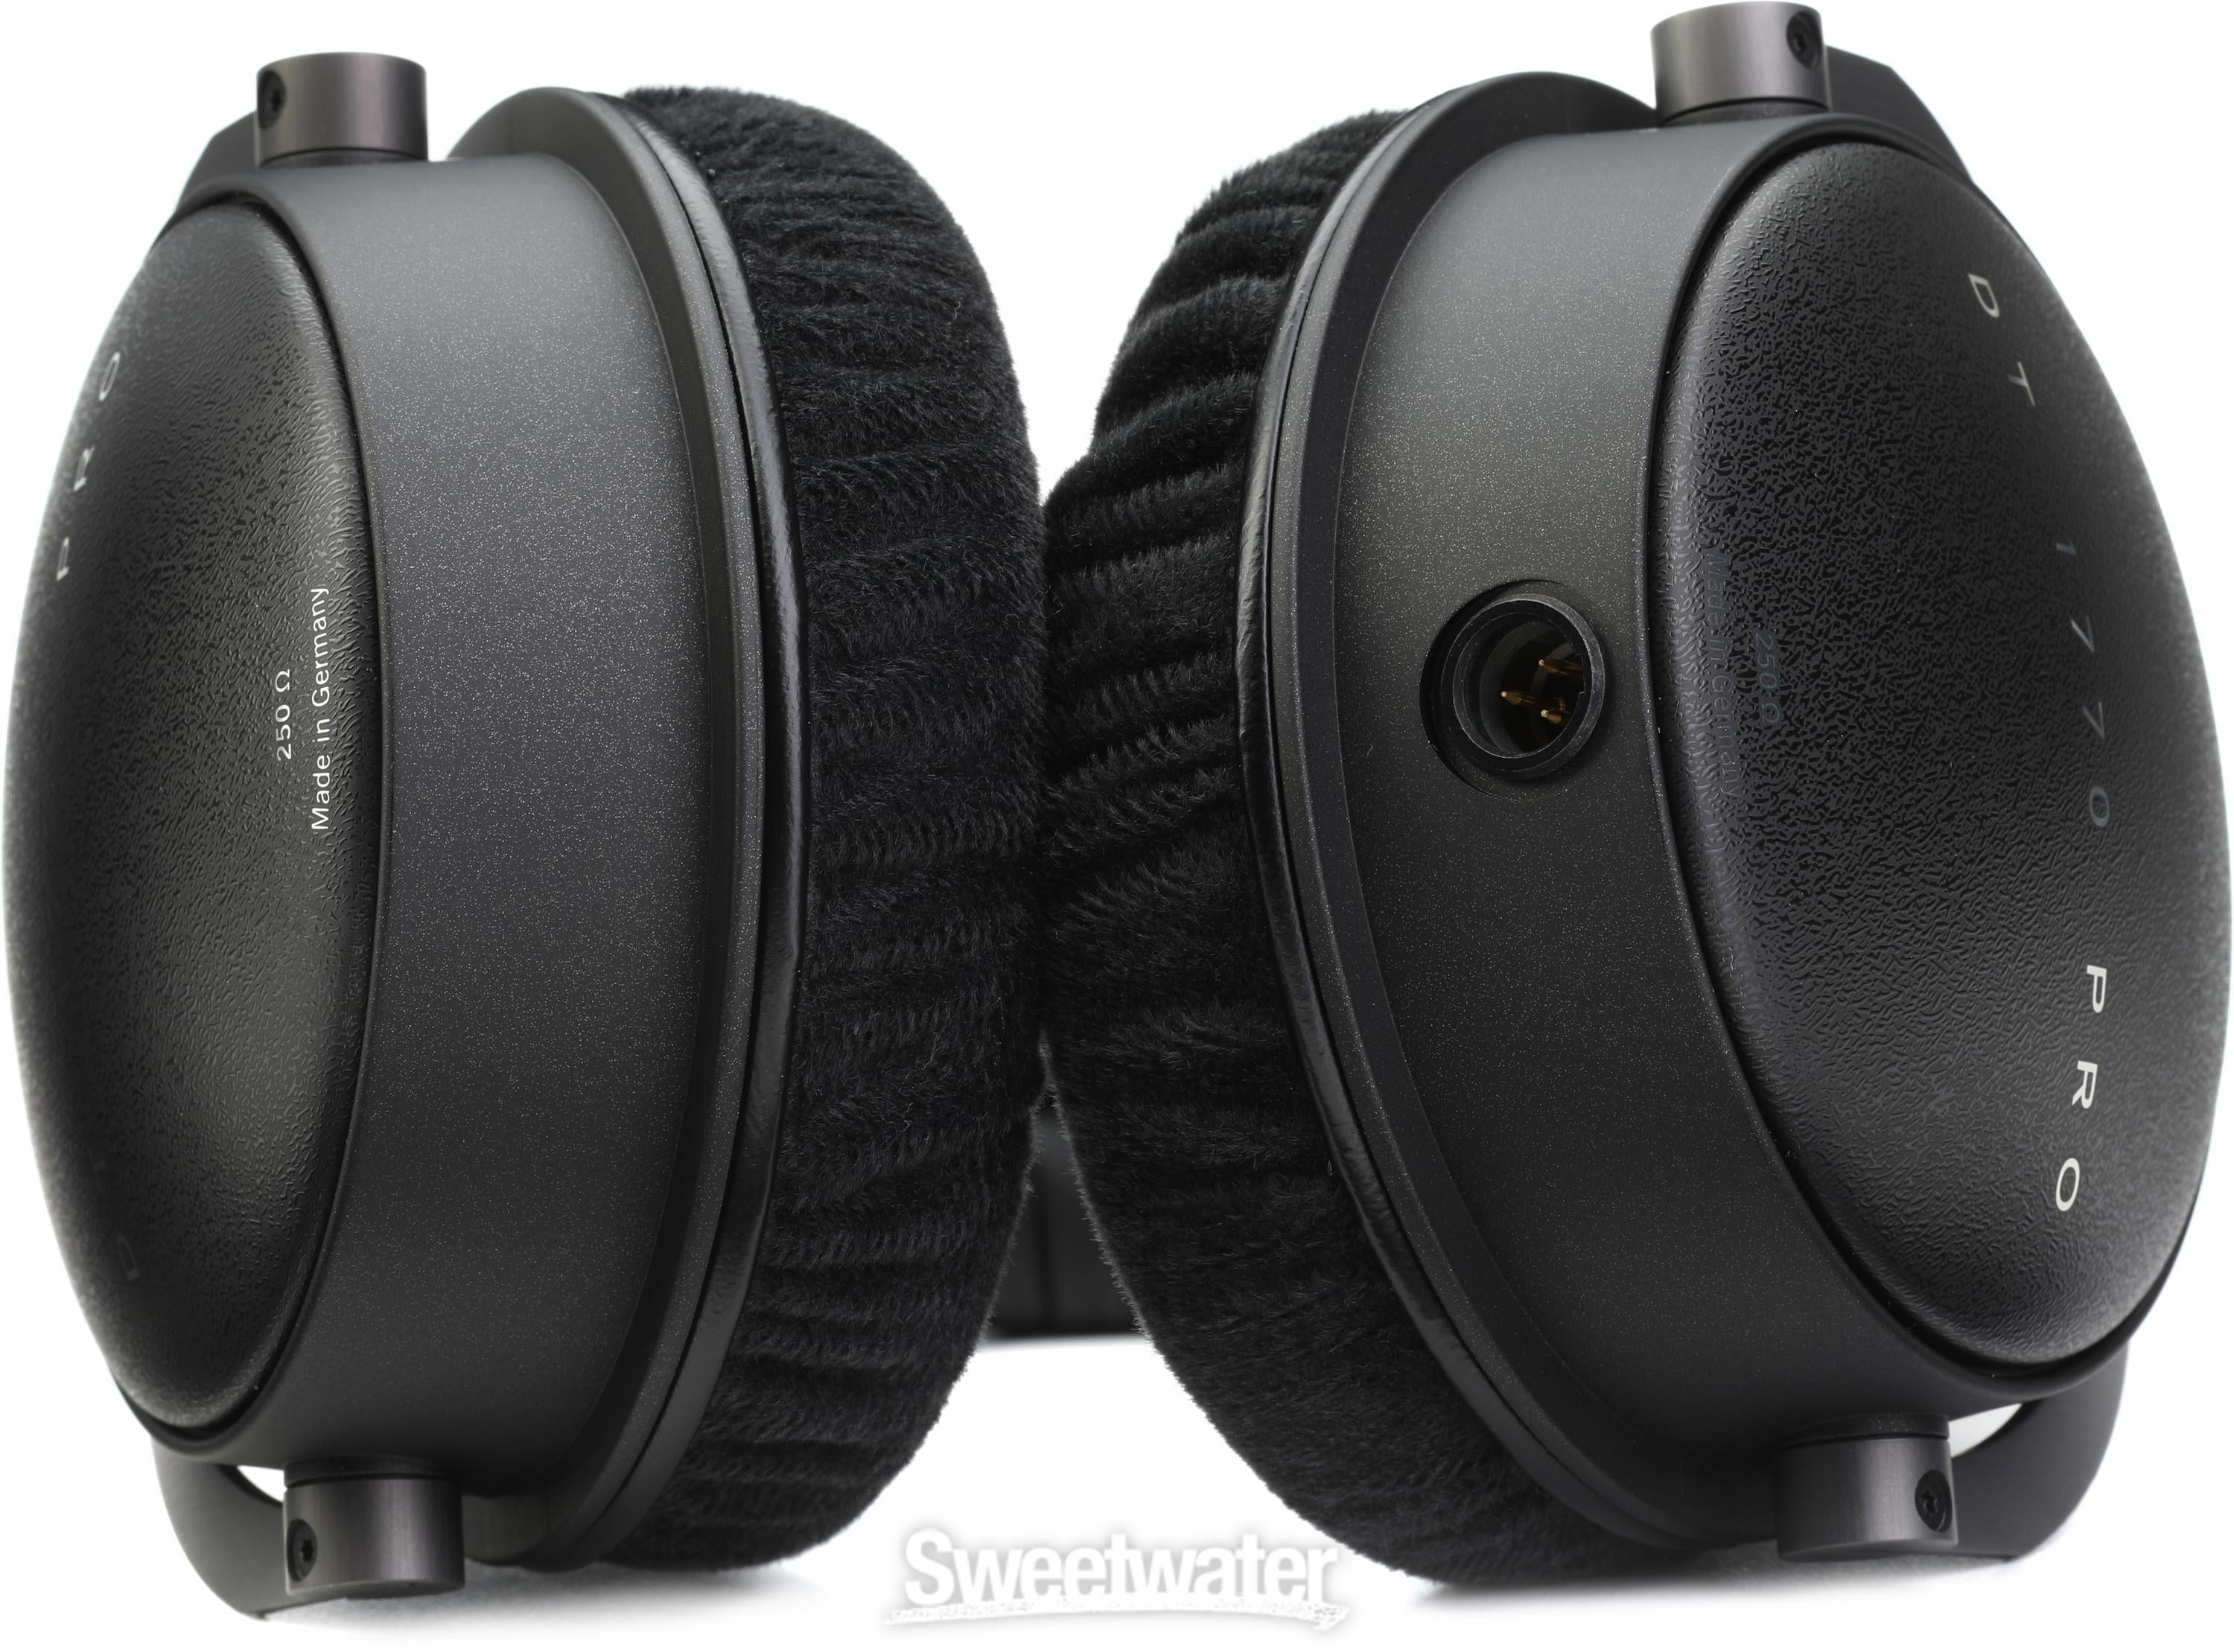 Beyerdynamic DT 1770 Pro Closed-back Studio Reference Headphones